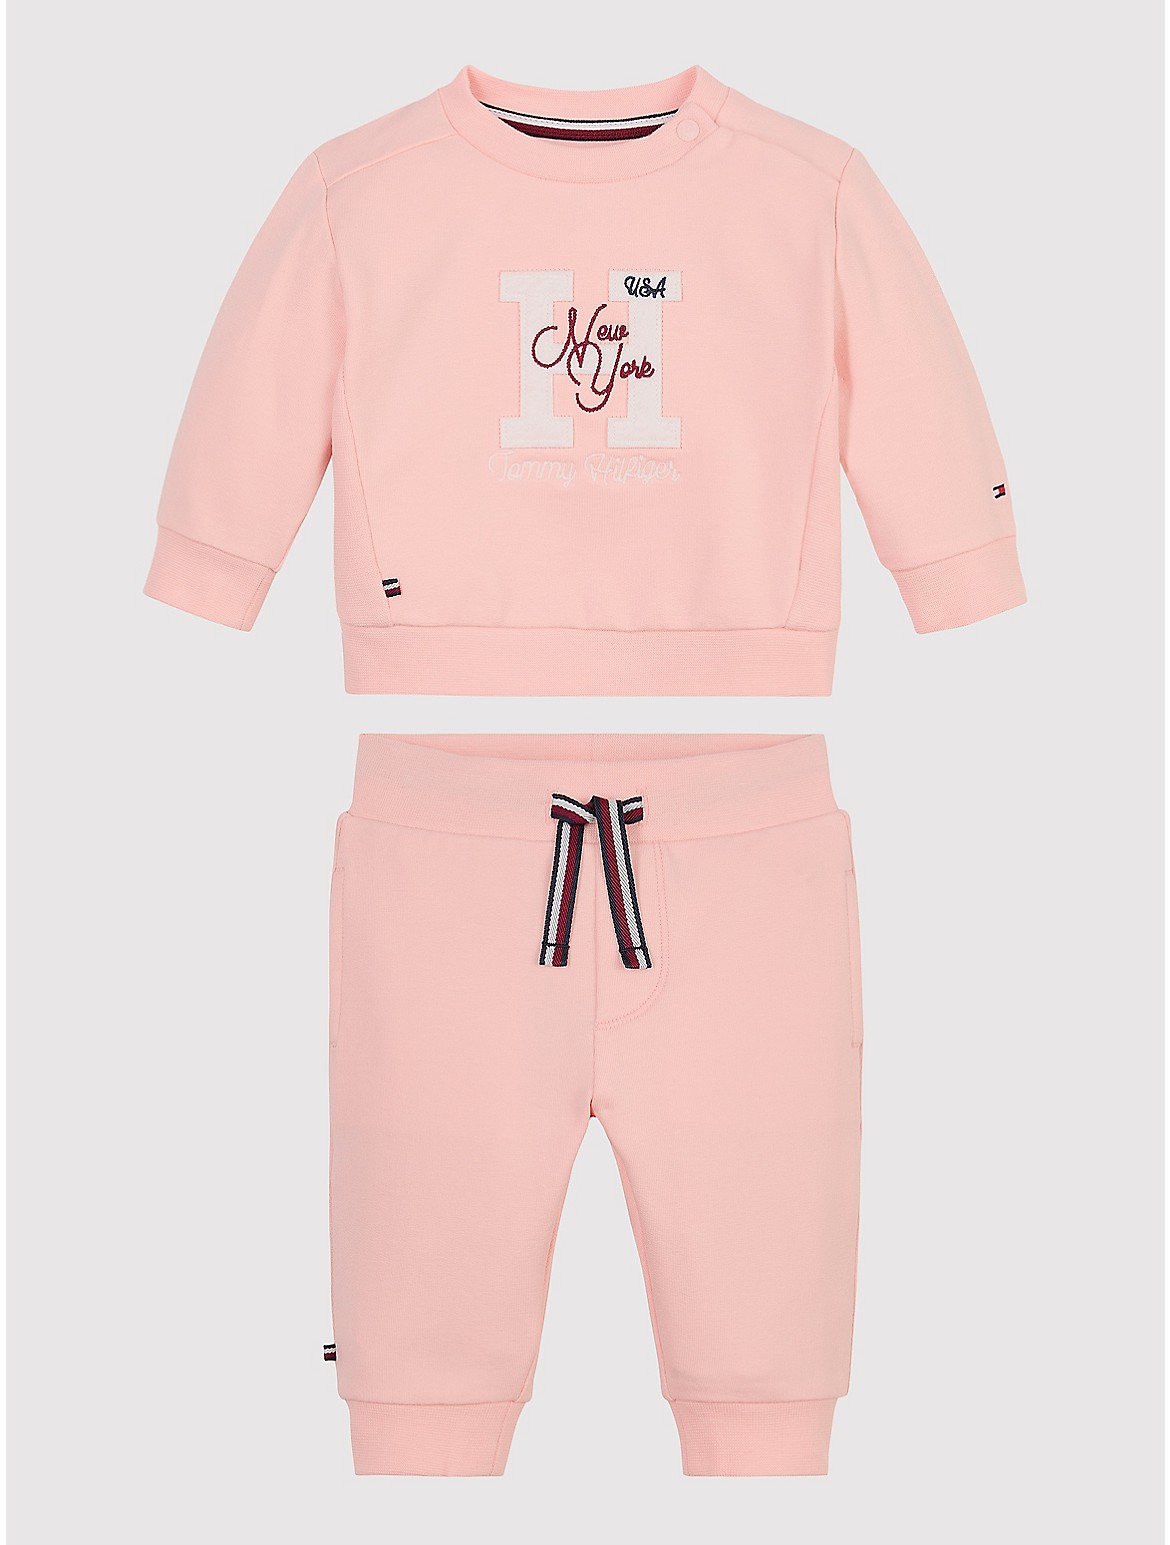 Tommy Hilfiger Babies' Blame The Cat Sweatsuit Set - Pink - 3-6M